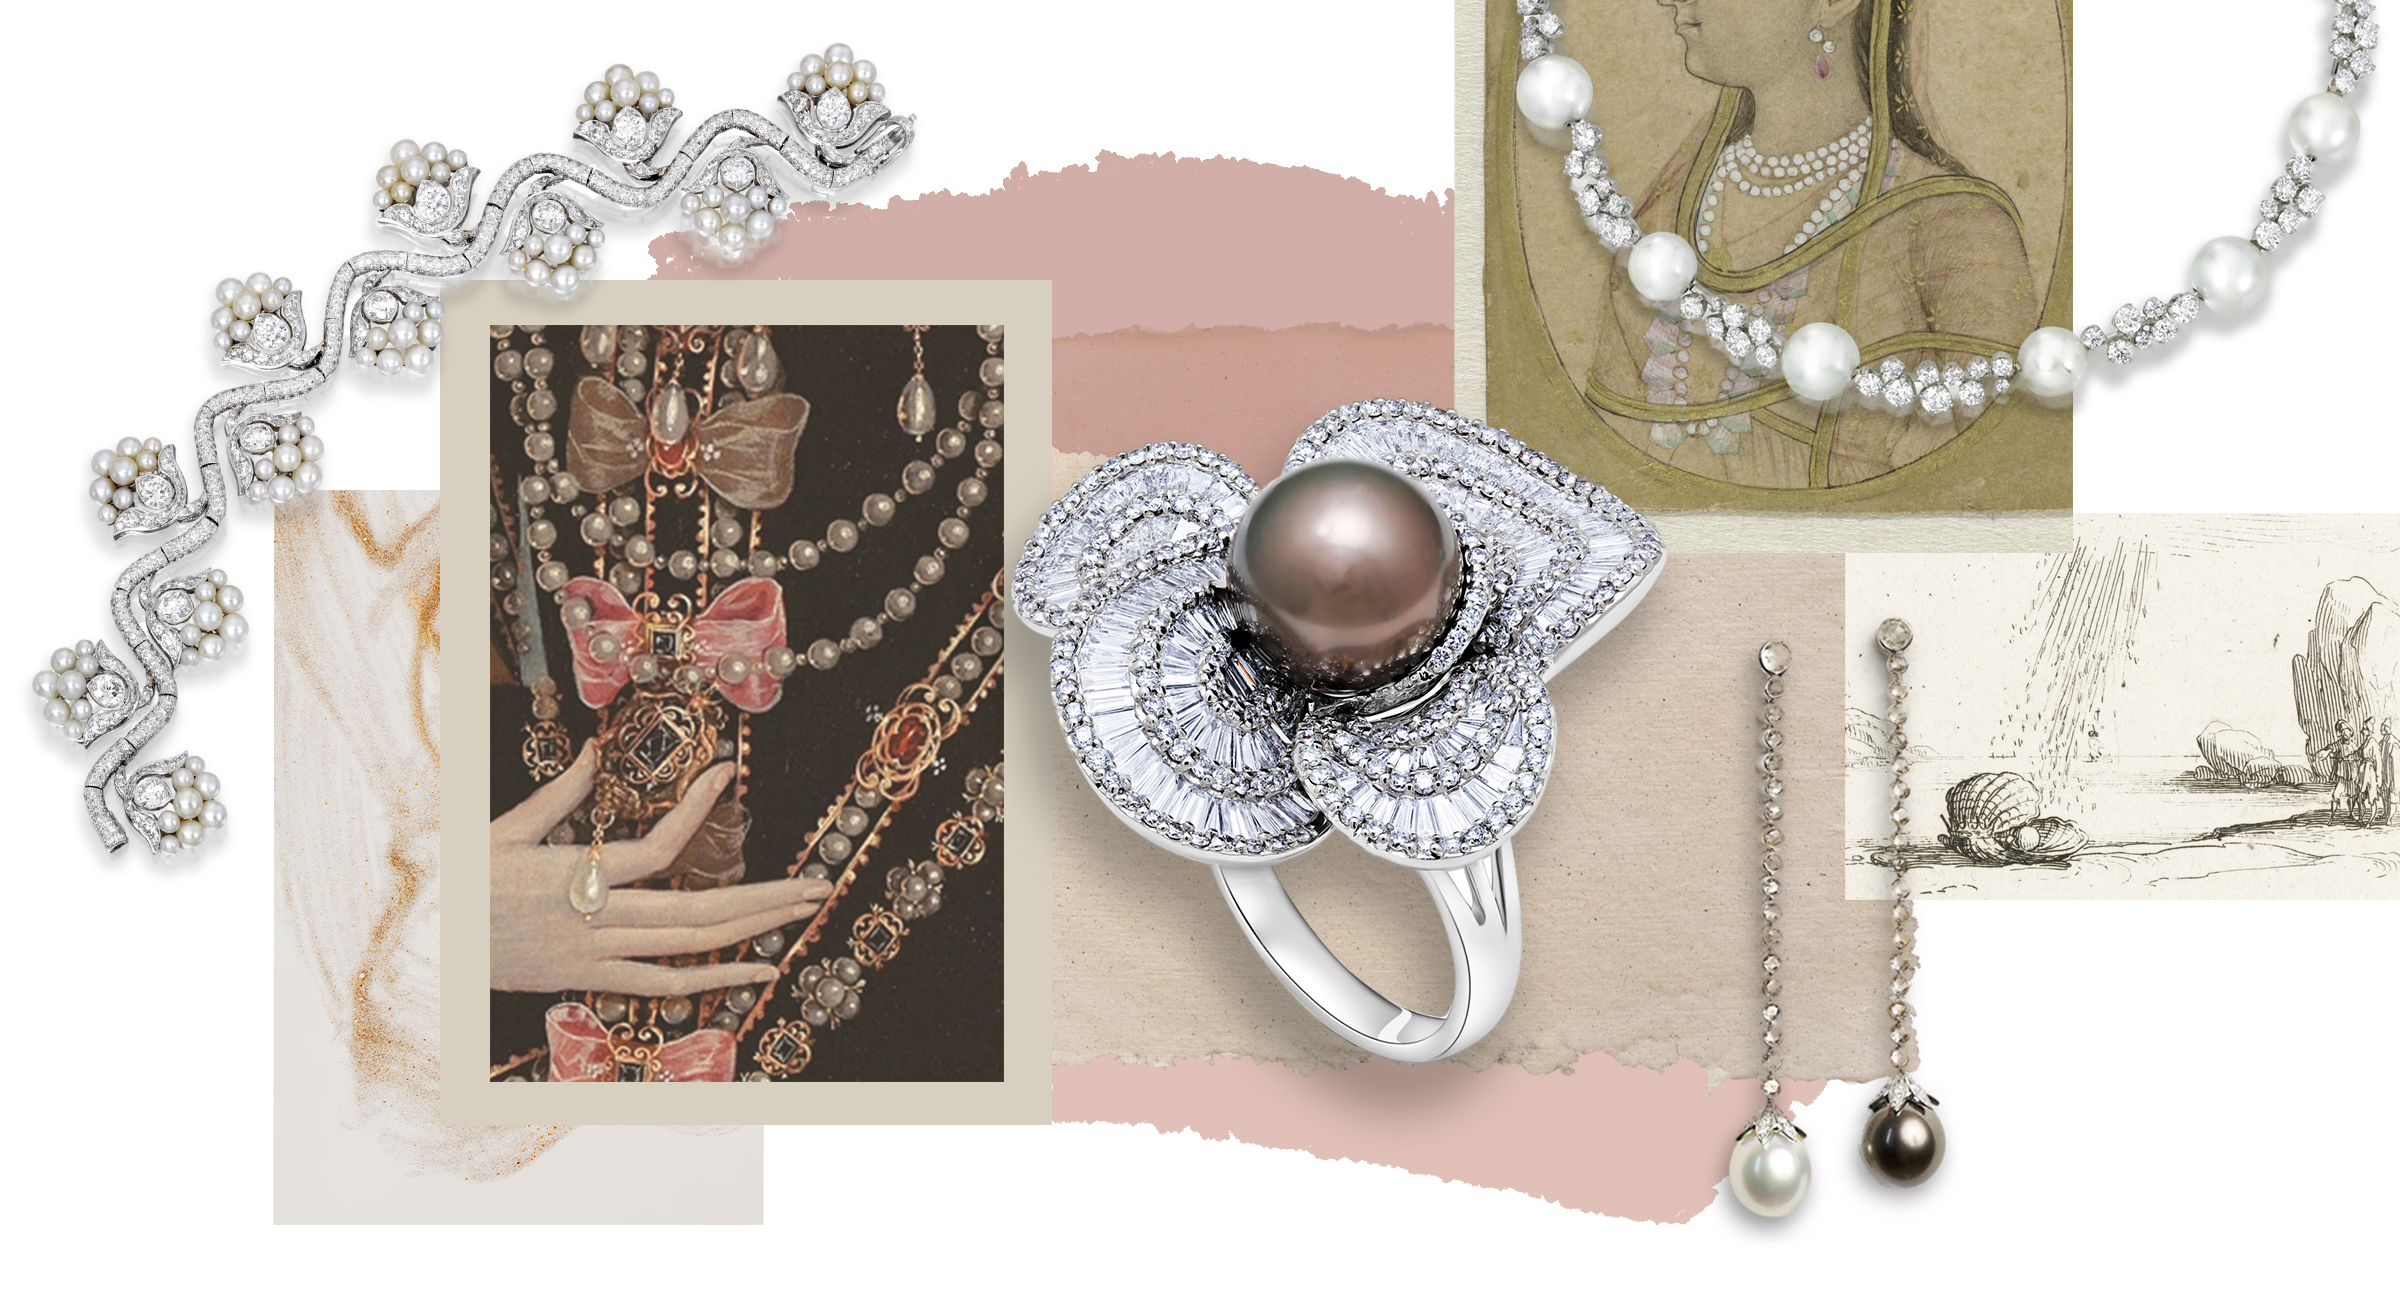 Timeless elegance - Diamonds & pearls together